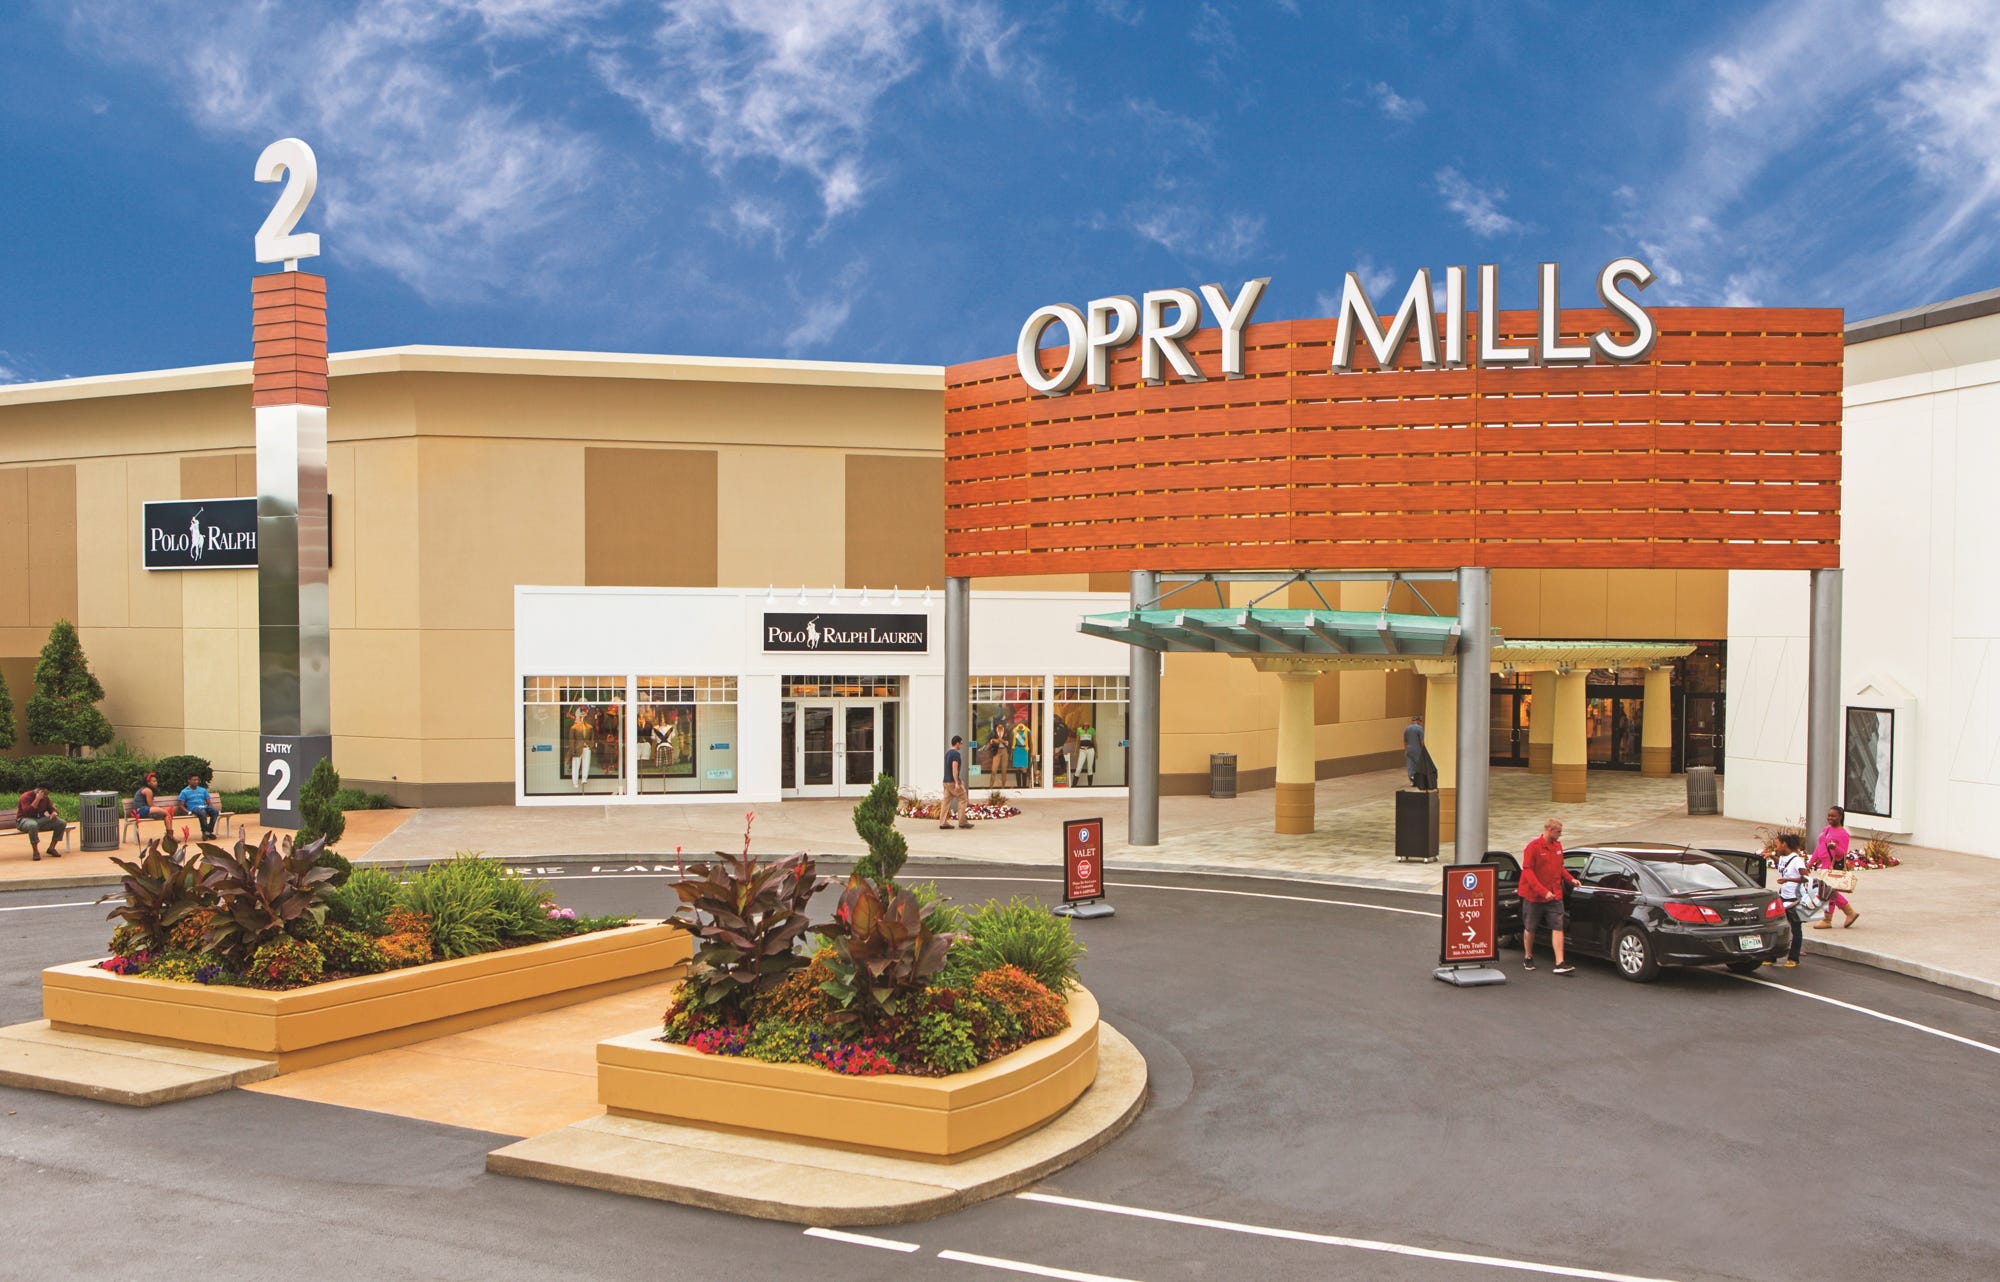 Opry Mills flood insurance decision 